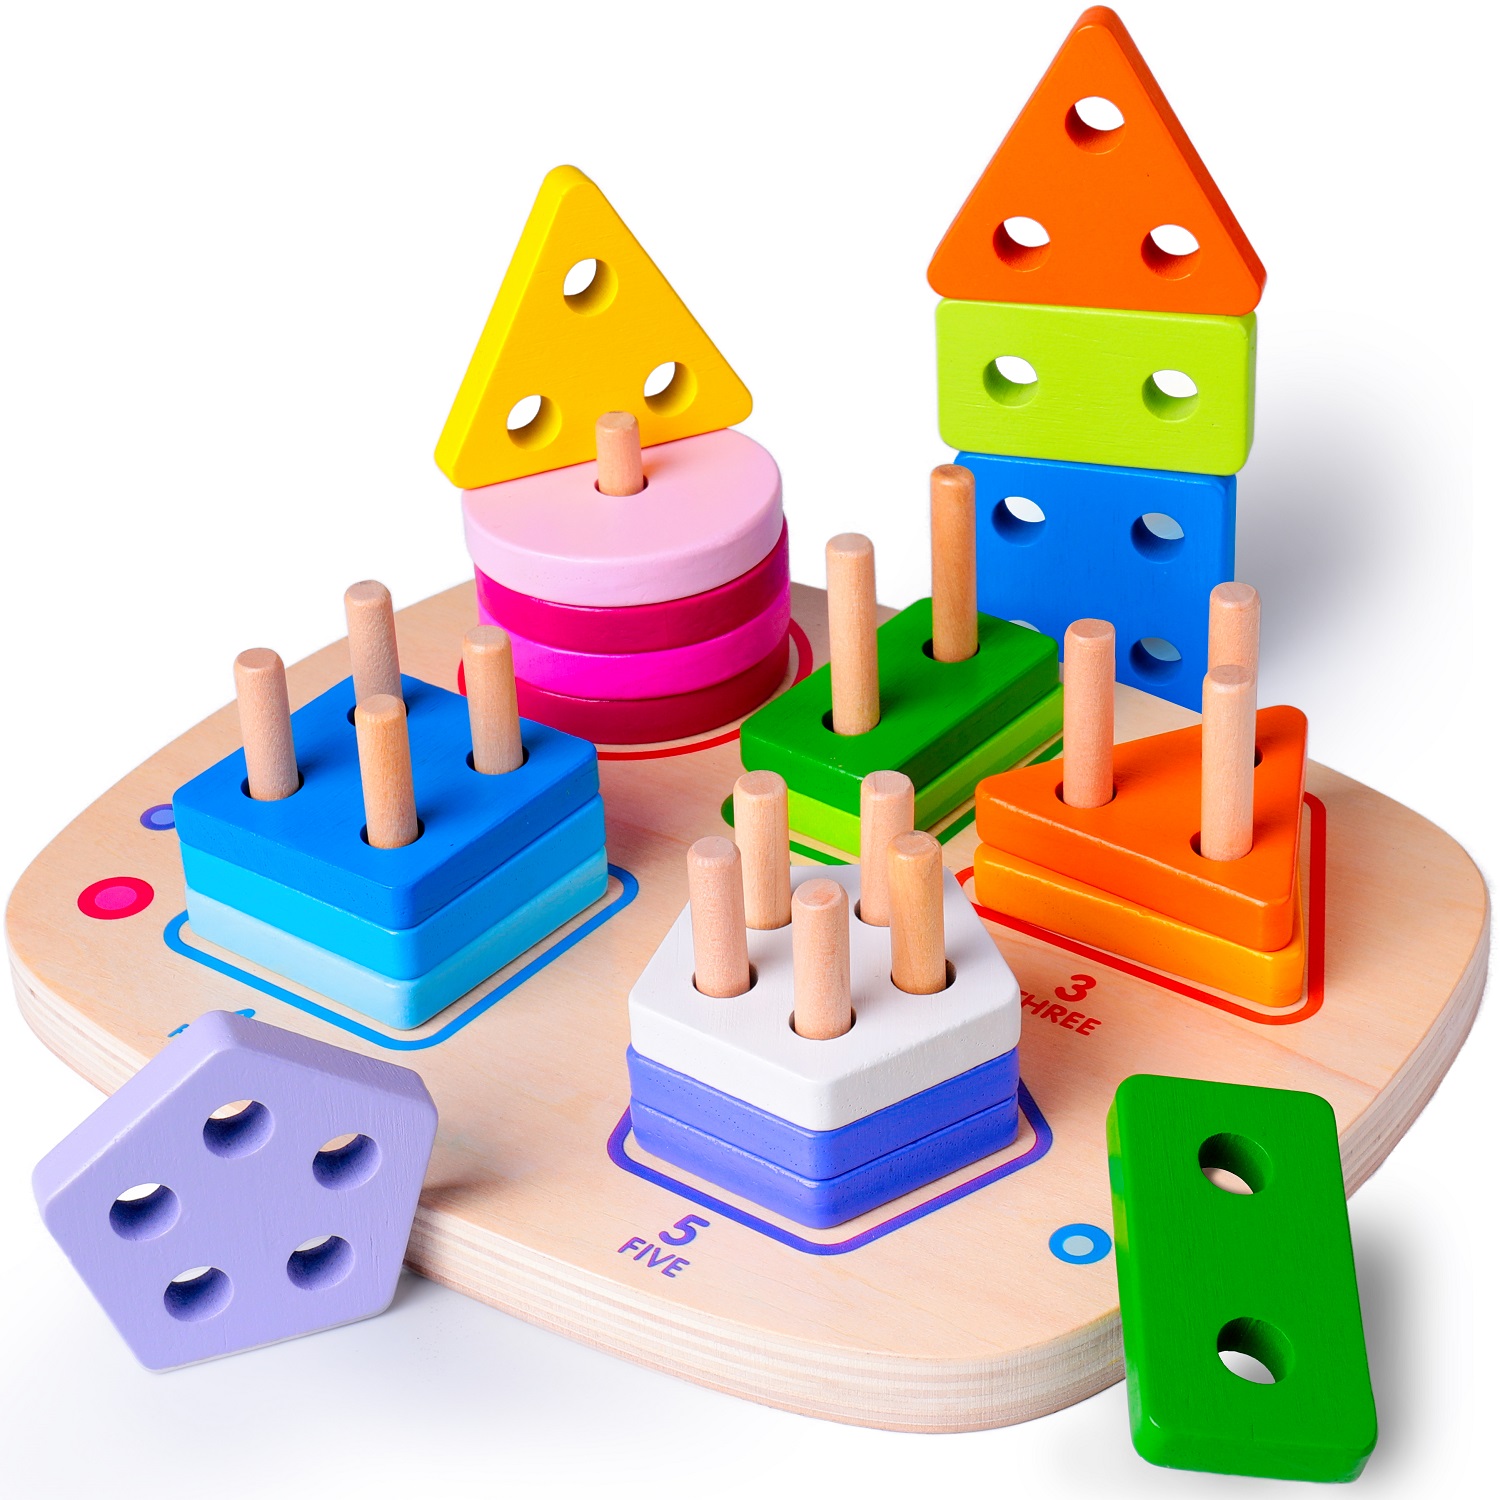 Wooden Educational Preschool Toddler Toys for Boys Girls Montessori Toy 